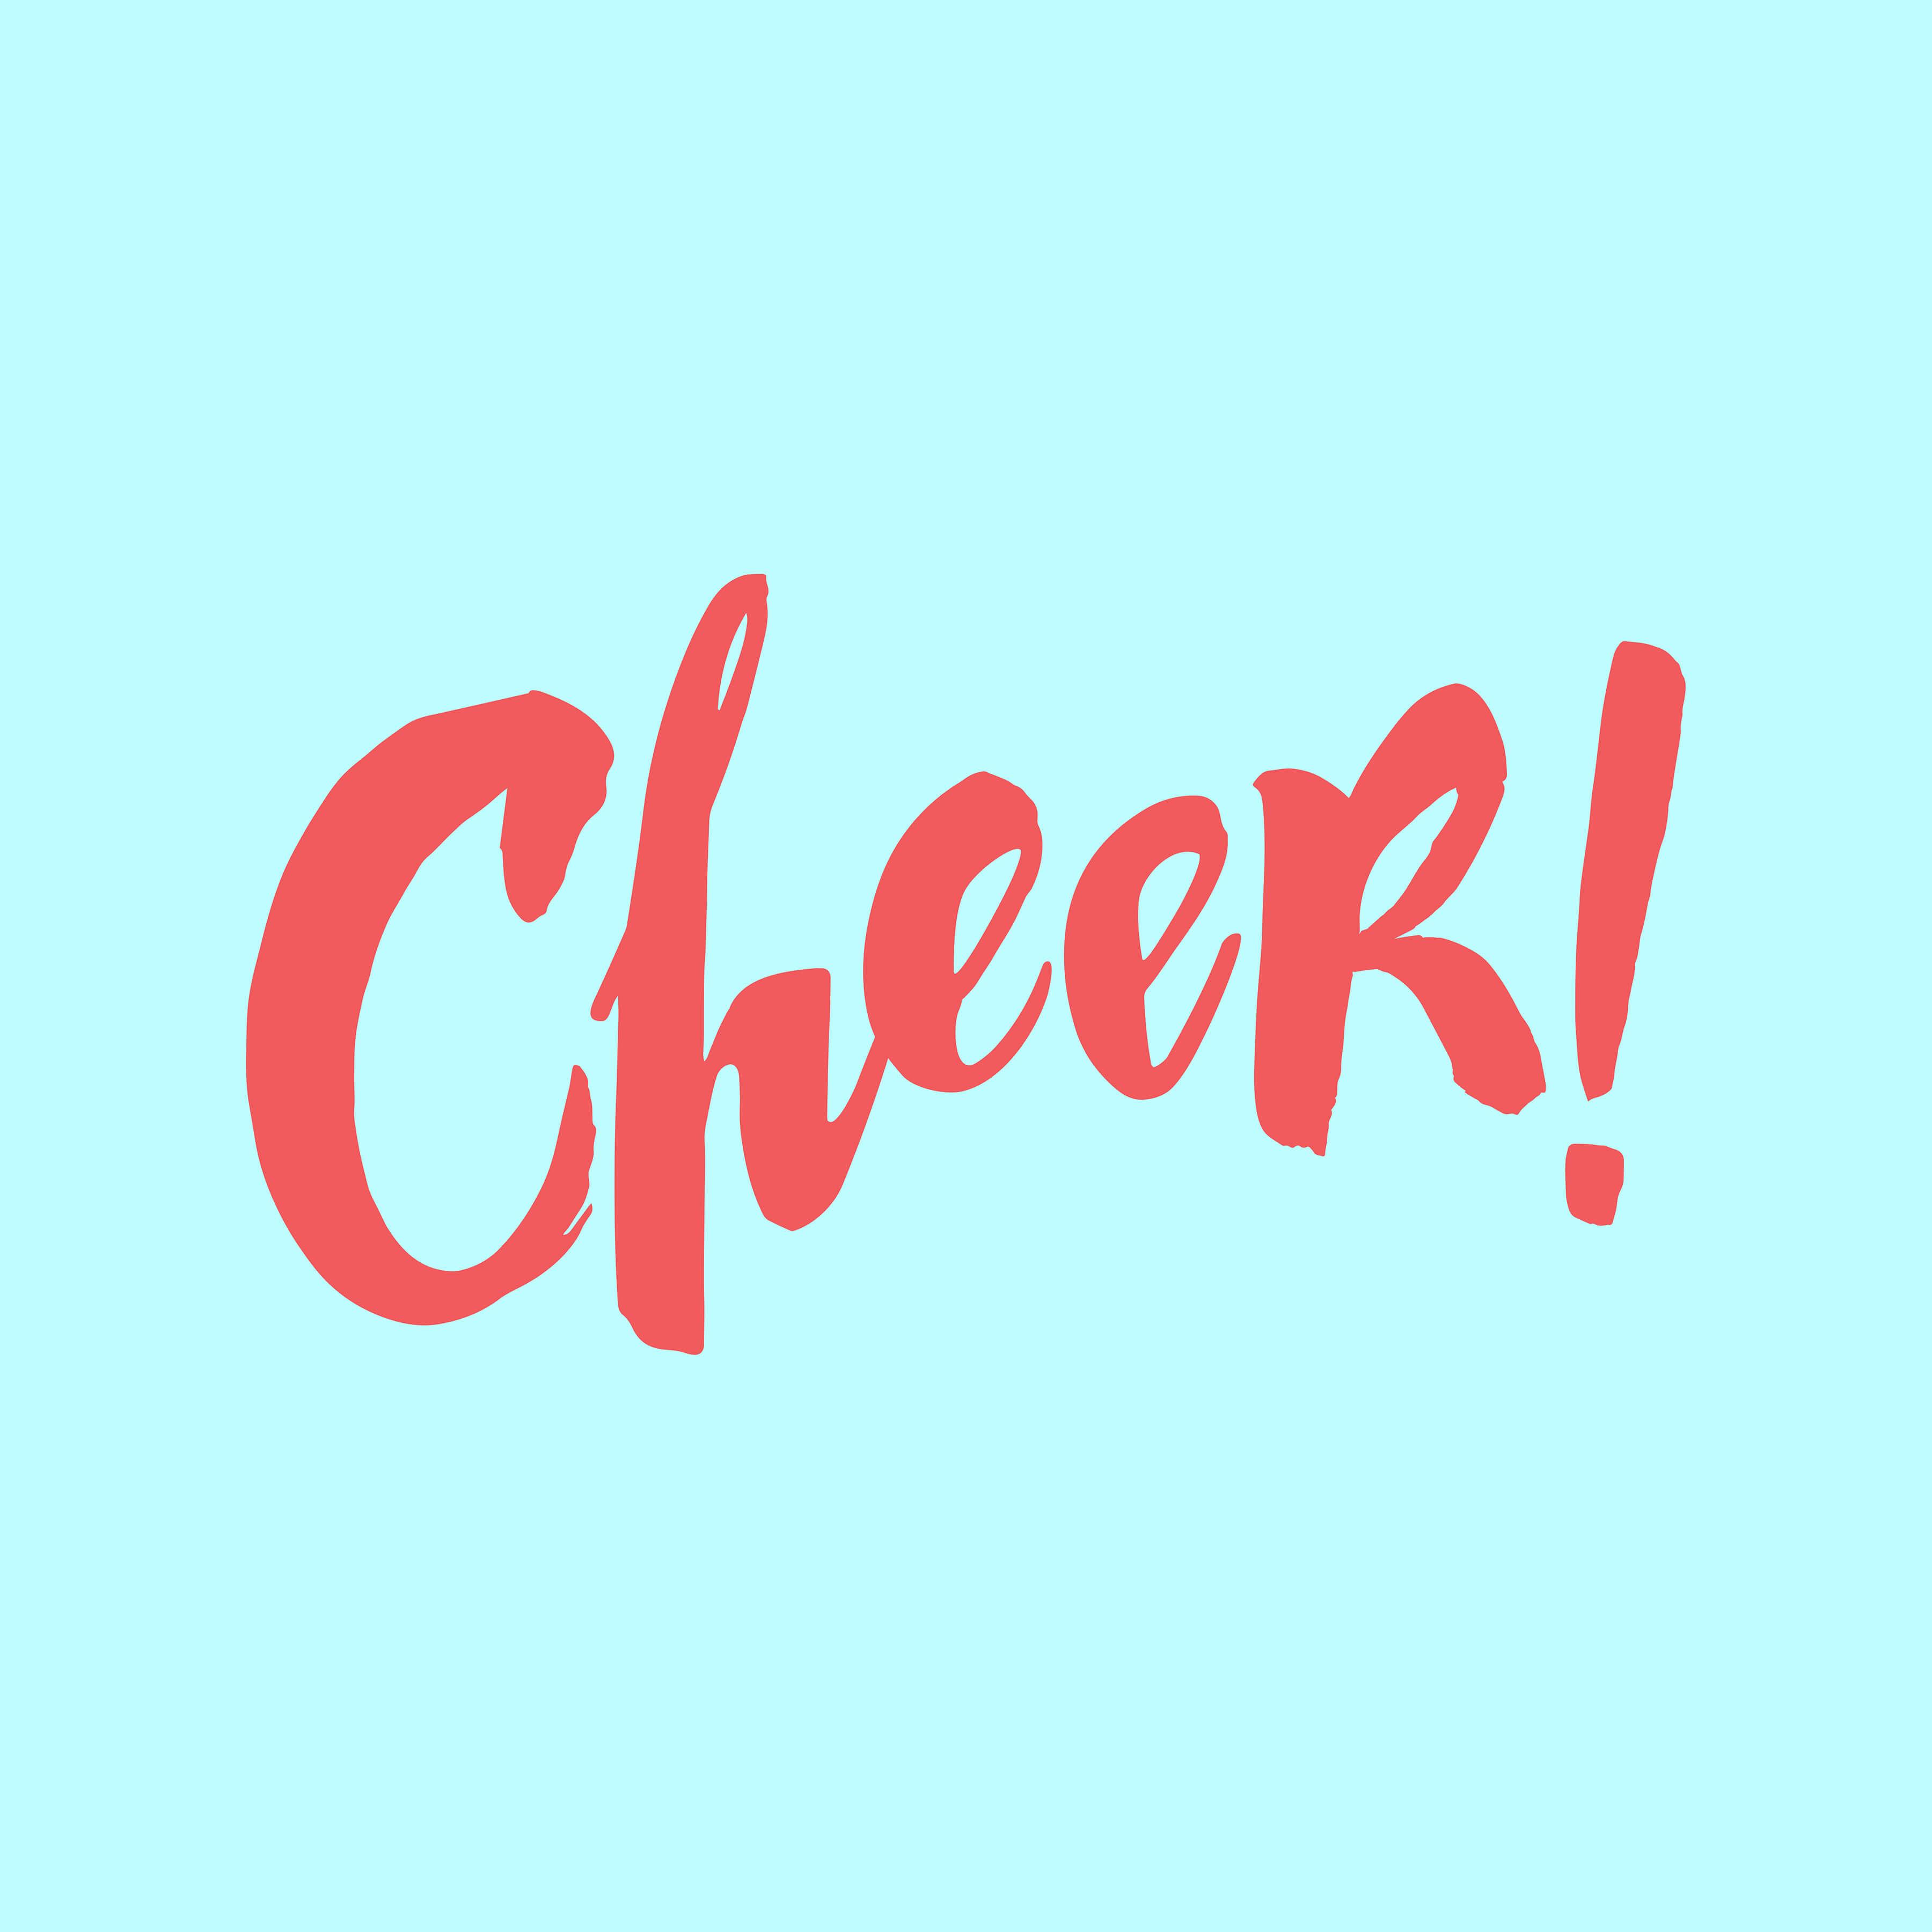 Cheer Logo - Cheer! Logo Type Treatment - ST8MNT BRAND AGENCY